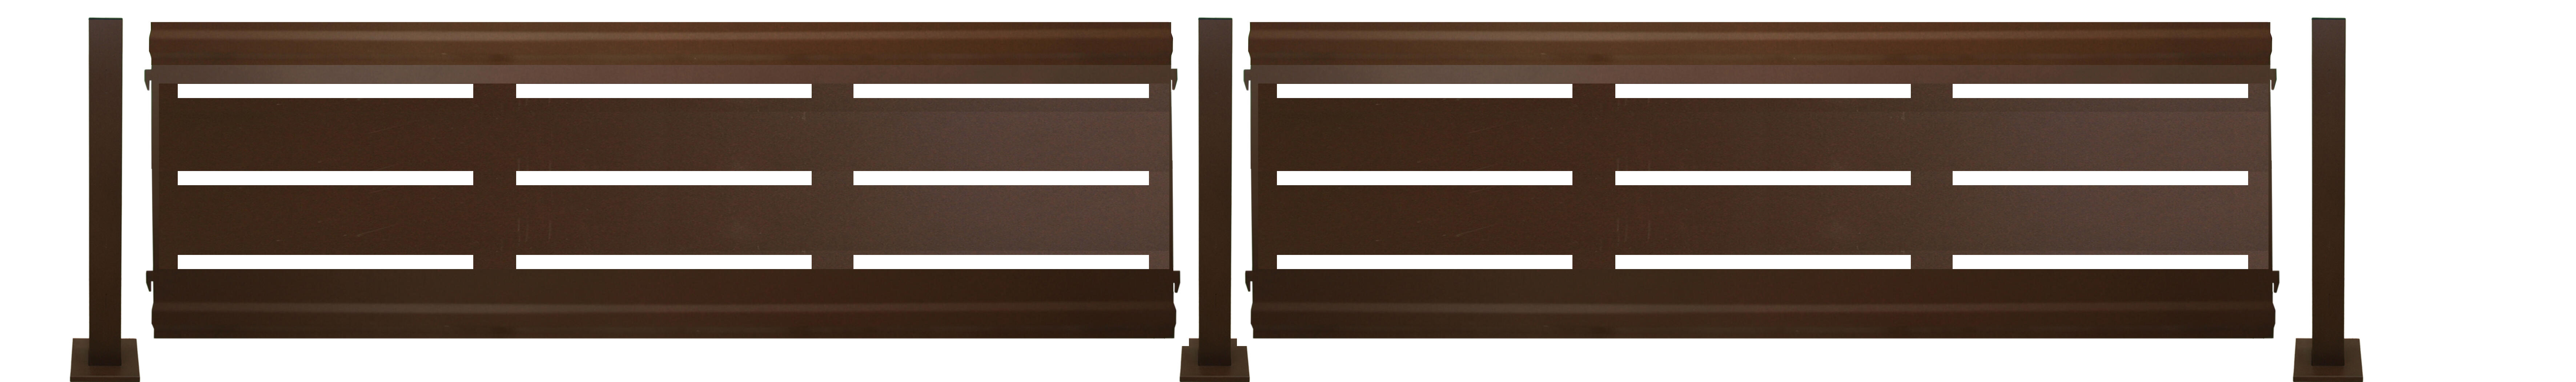 Kit valla de acero galvanizado rayas marrón forja 306x50x13 cm